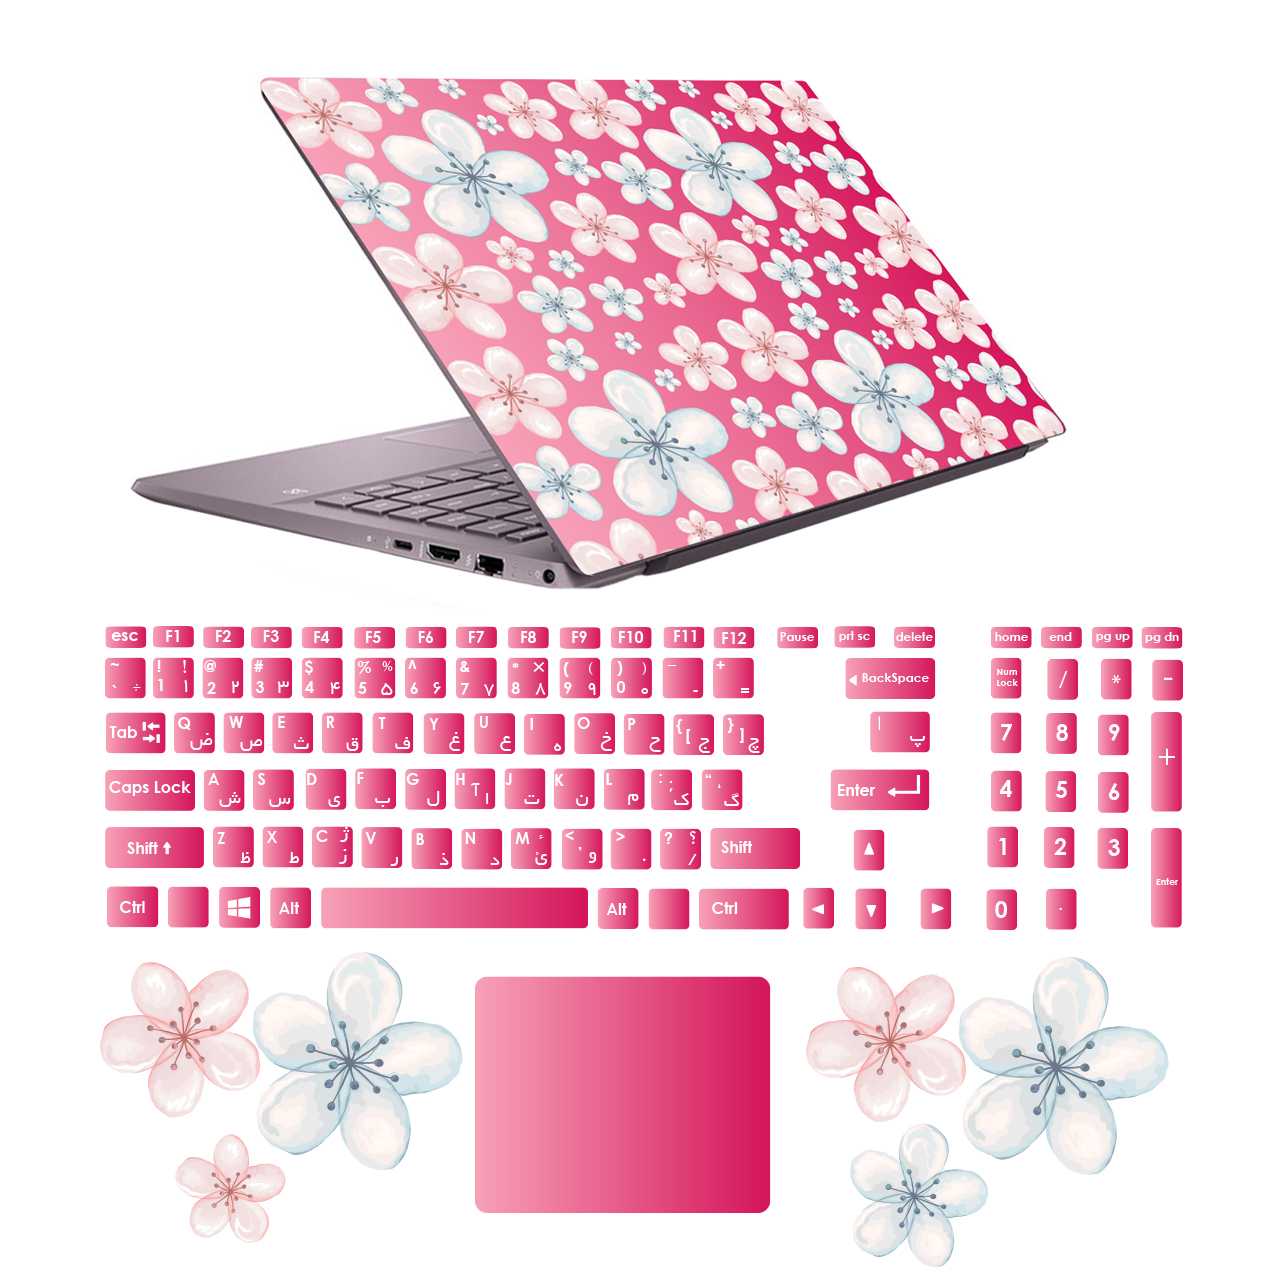 استیکر لپ تاپ صالسو آرت مدل 5056 hk به همراه برچسب حروف فارسی کیبورد